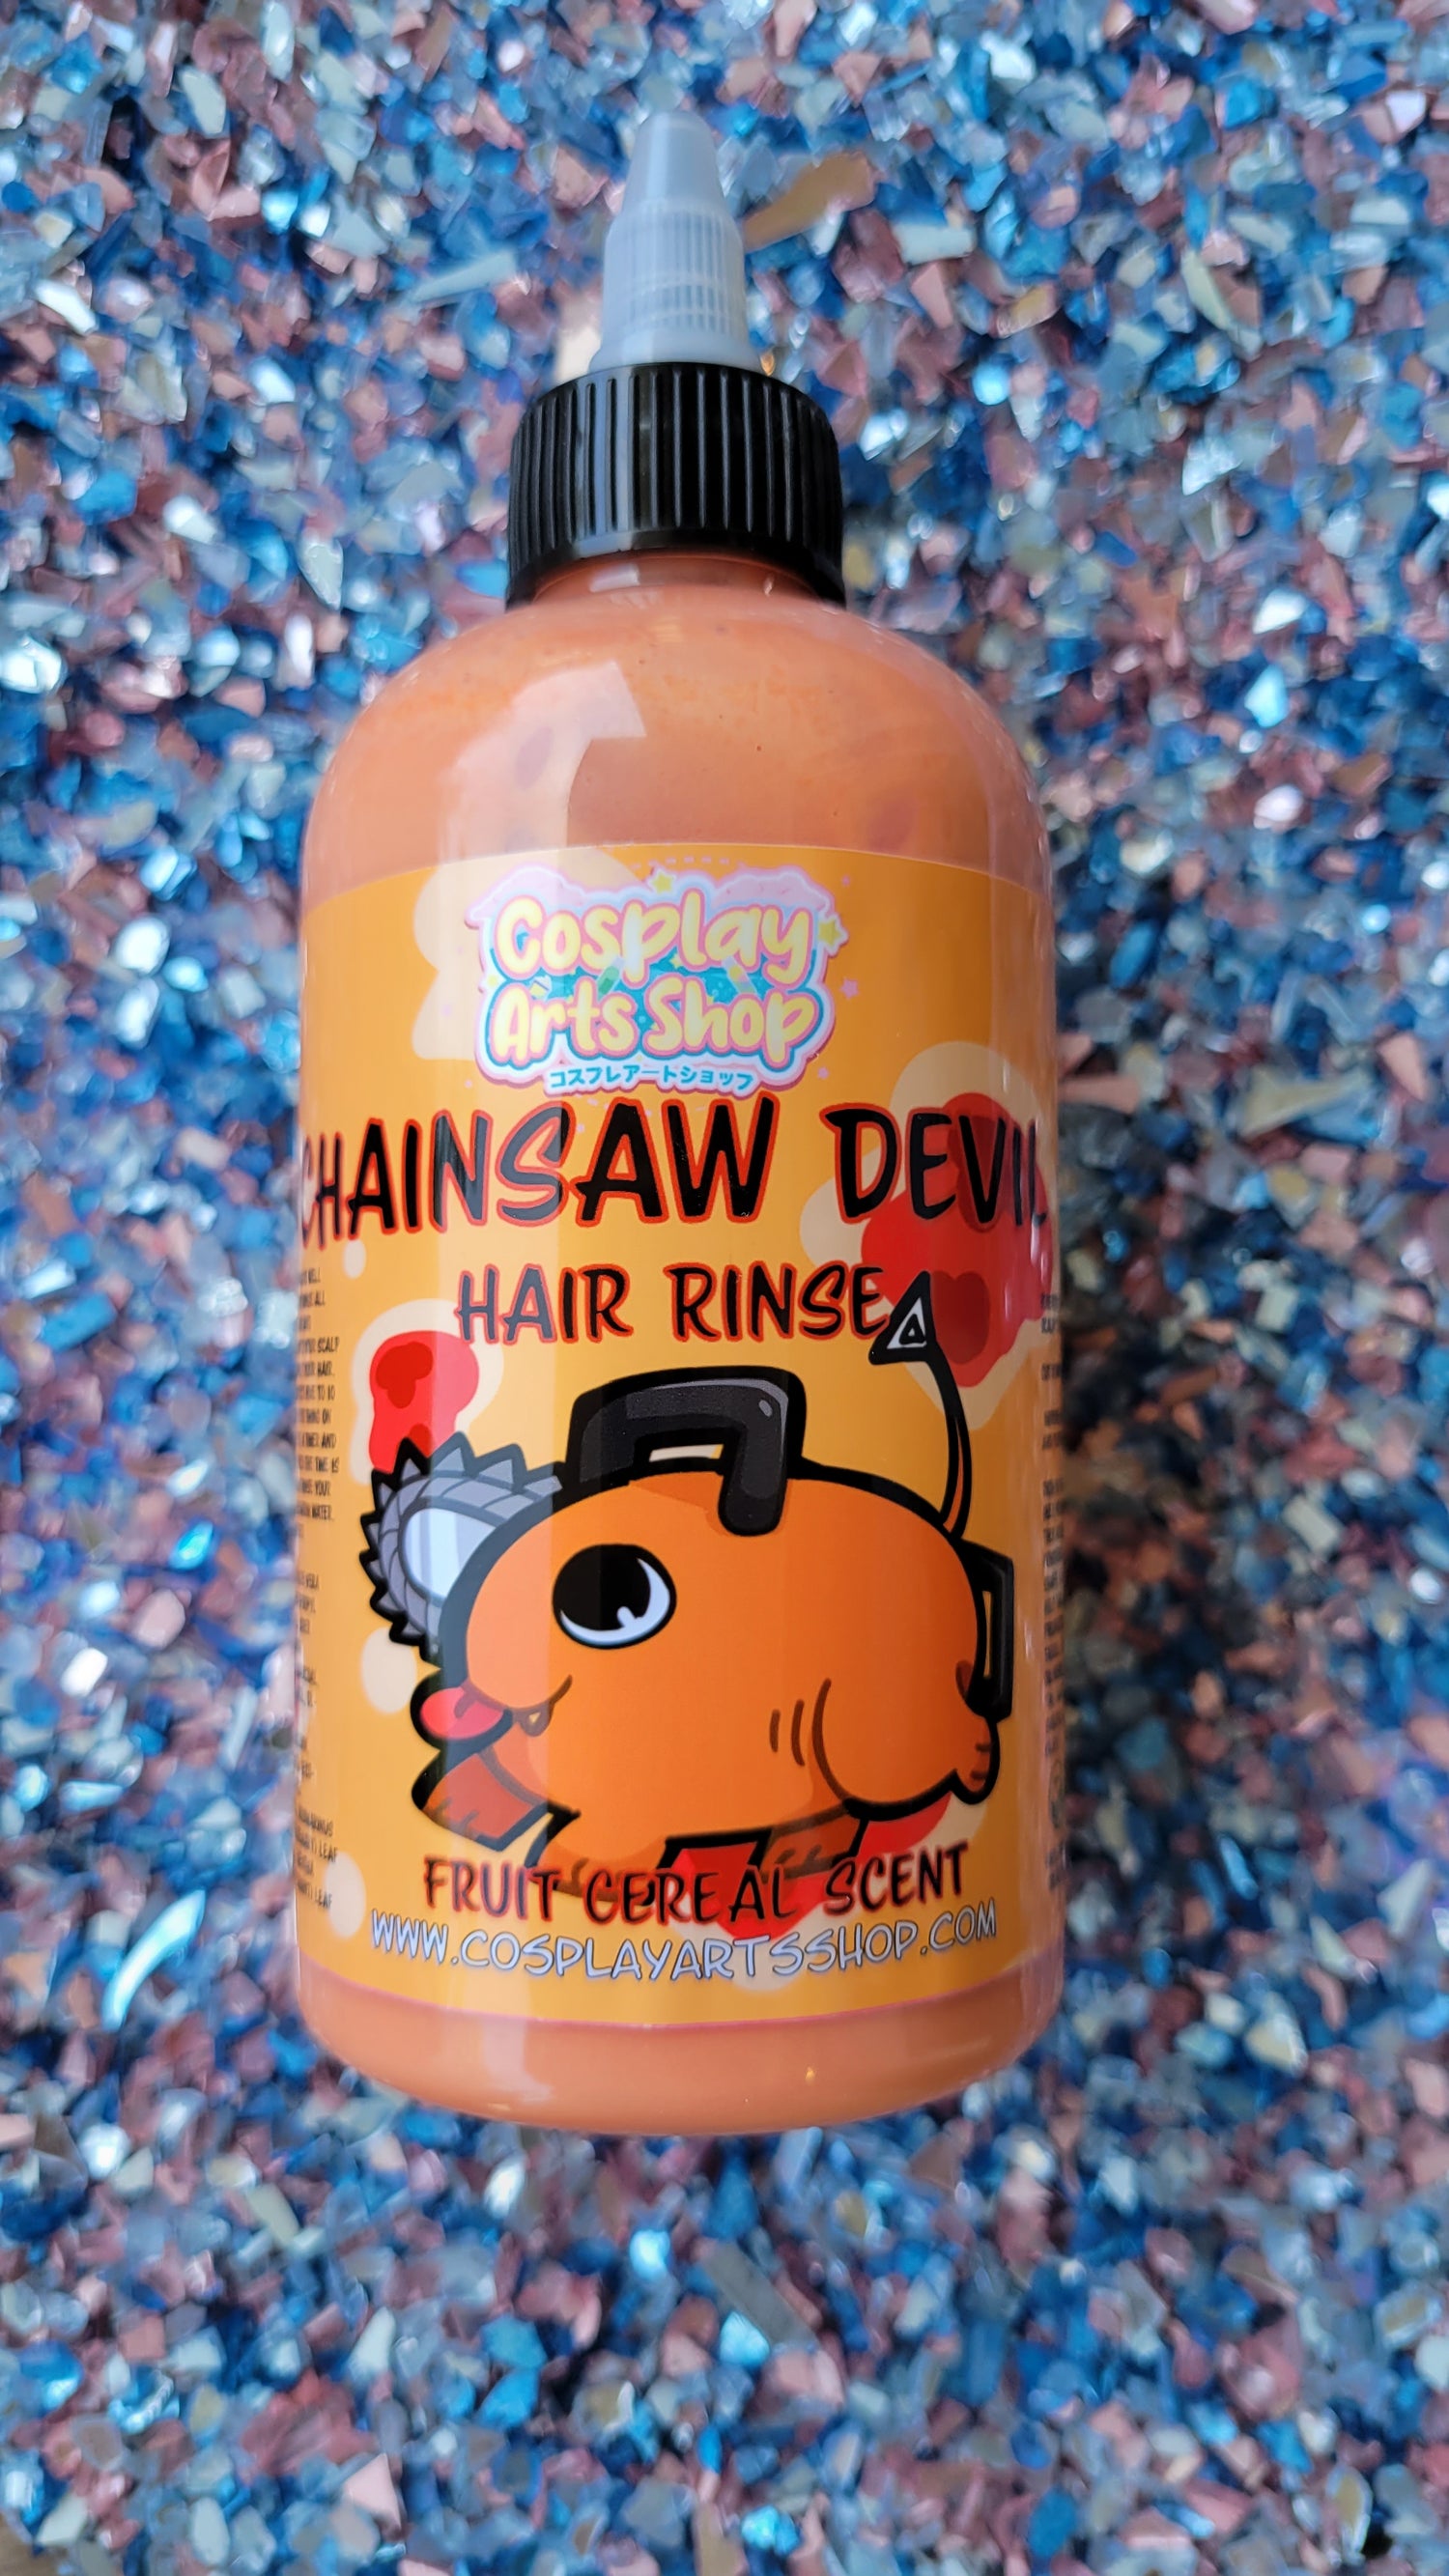 Chainsaw Devil Hair Rinse - Cosplay Arts Shop